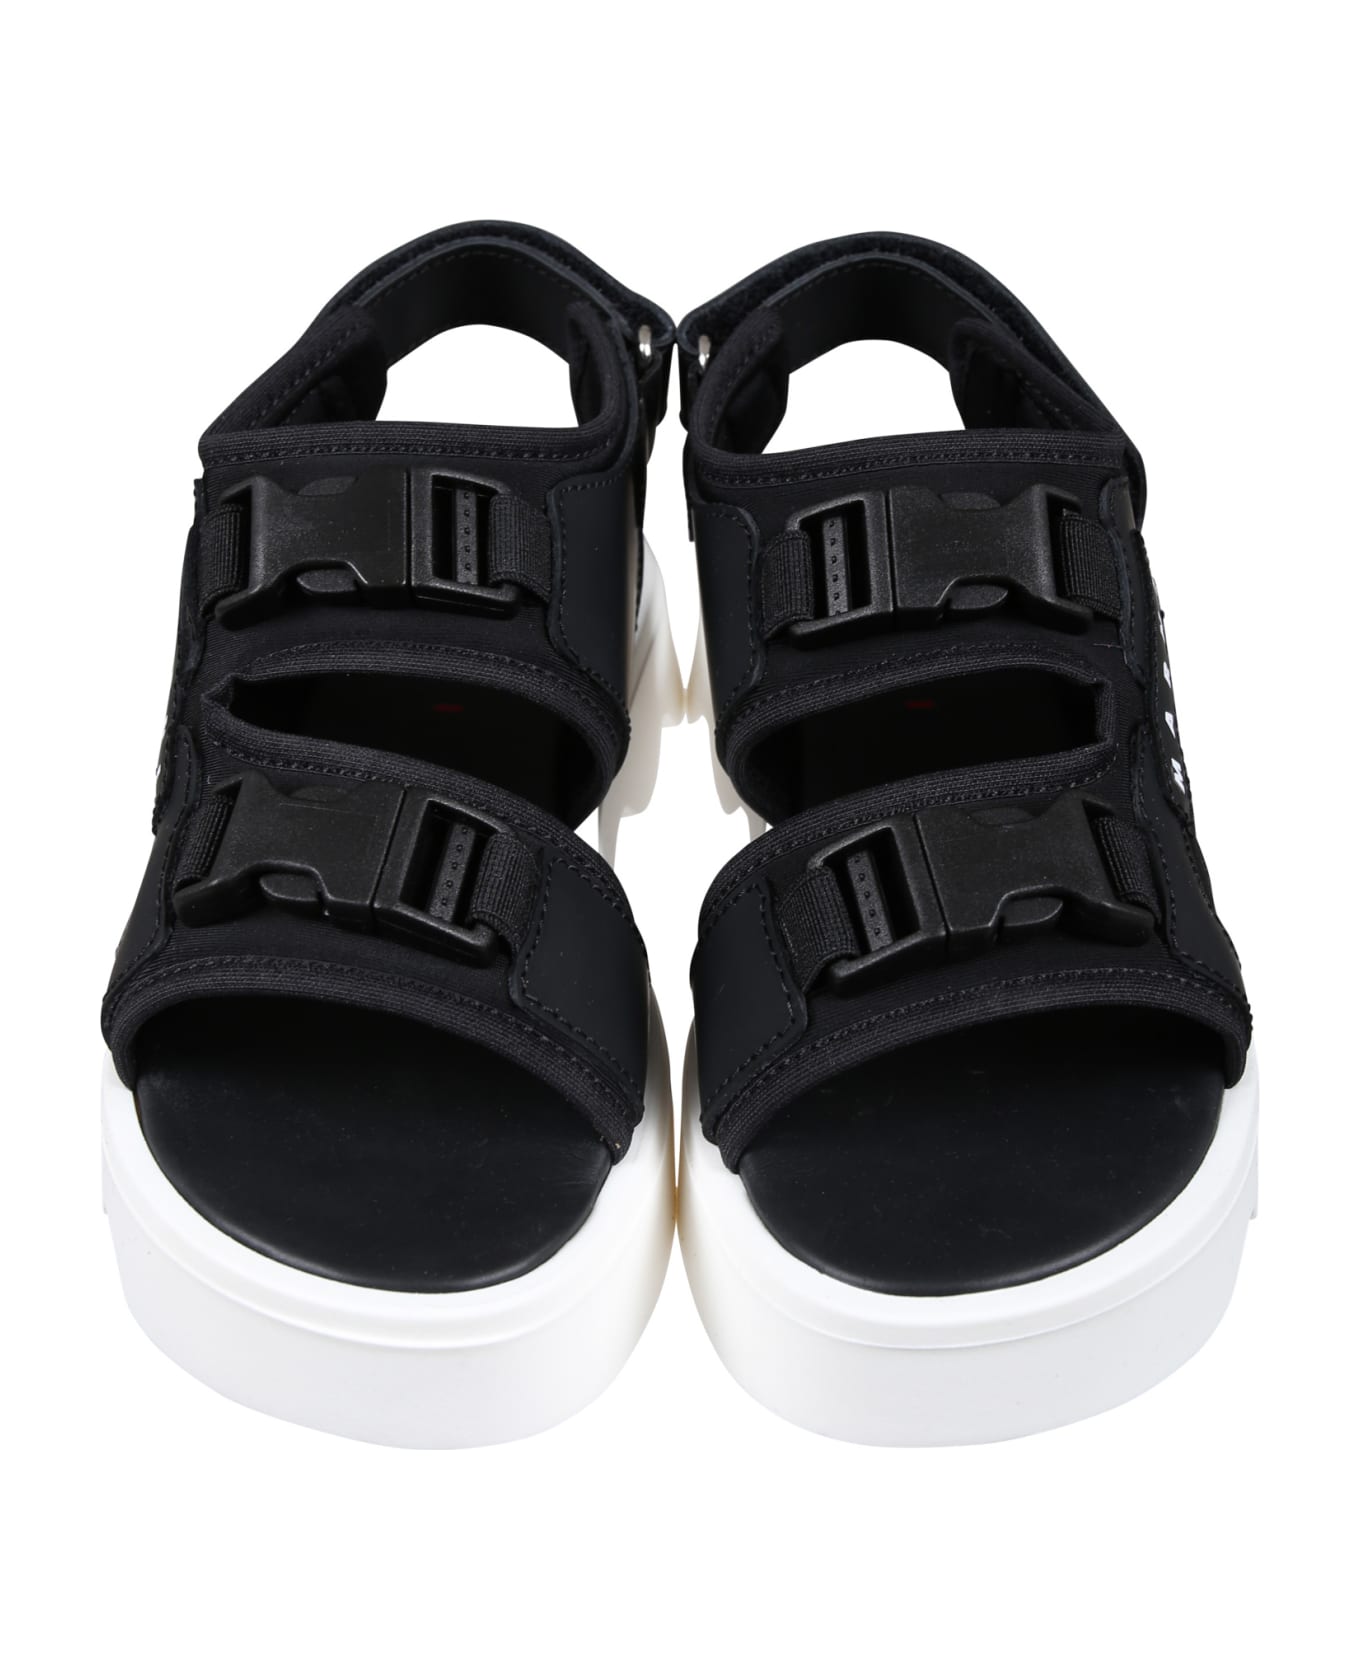 Marni Black Sandals For Girl With Logo - Black